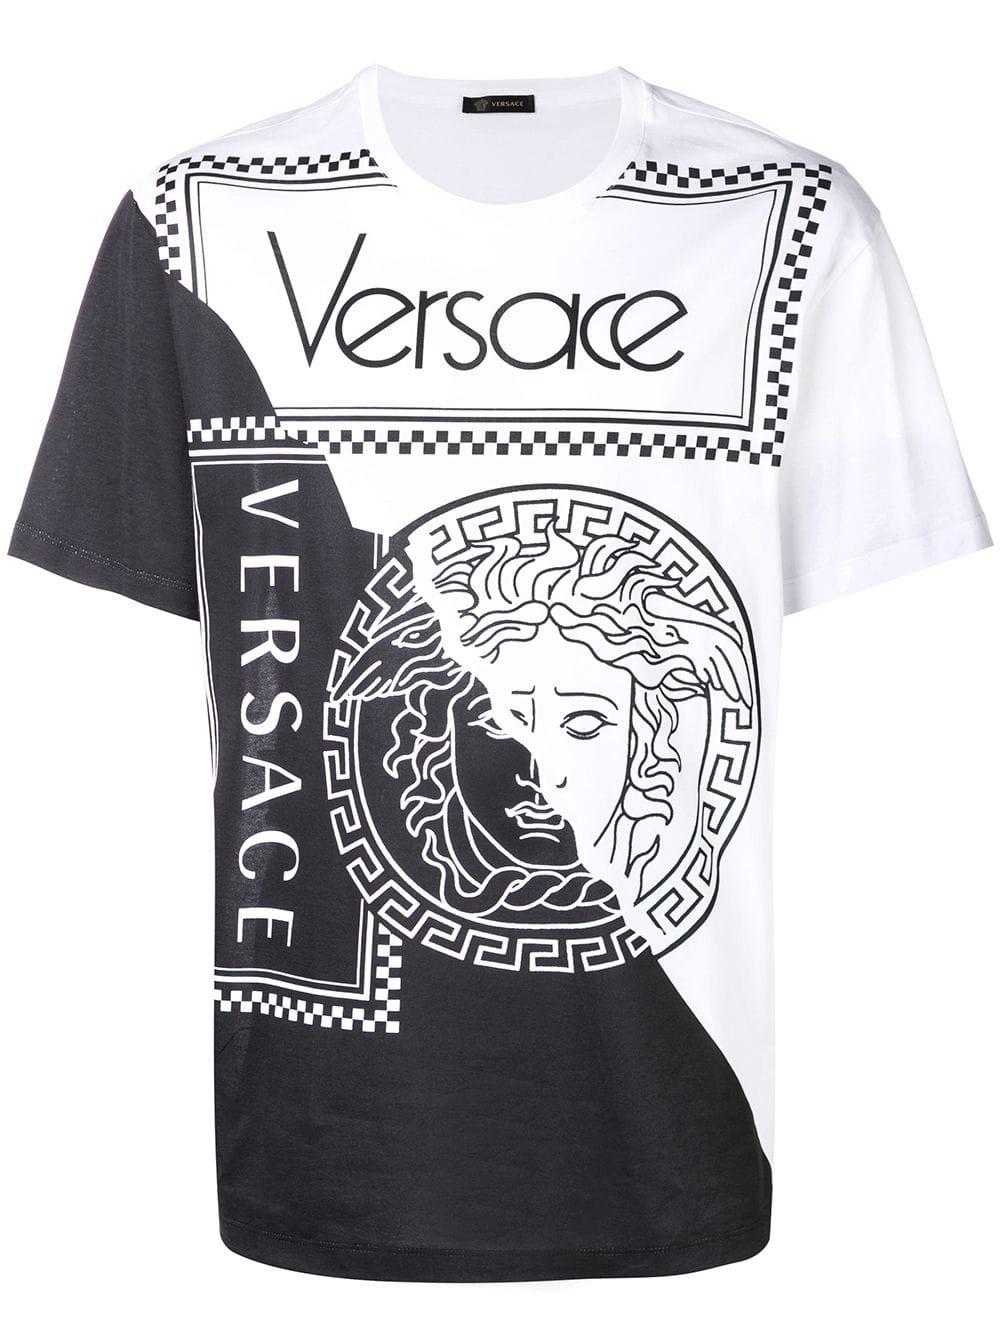 versace t shirt black and white